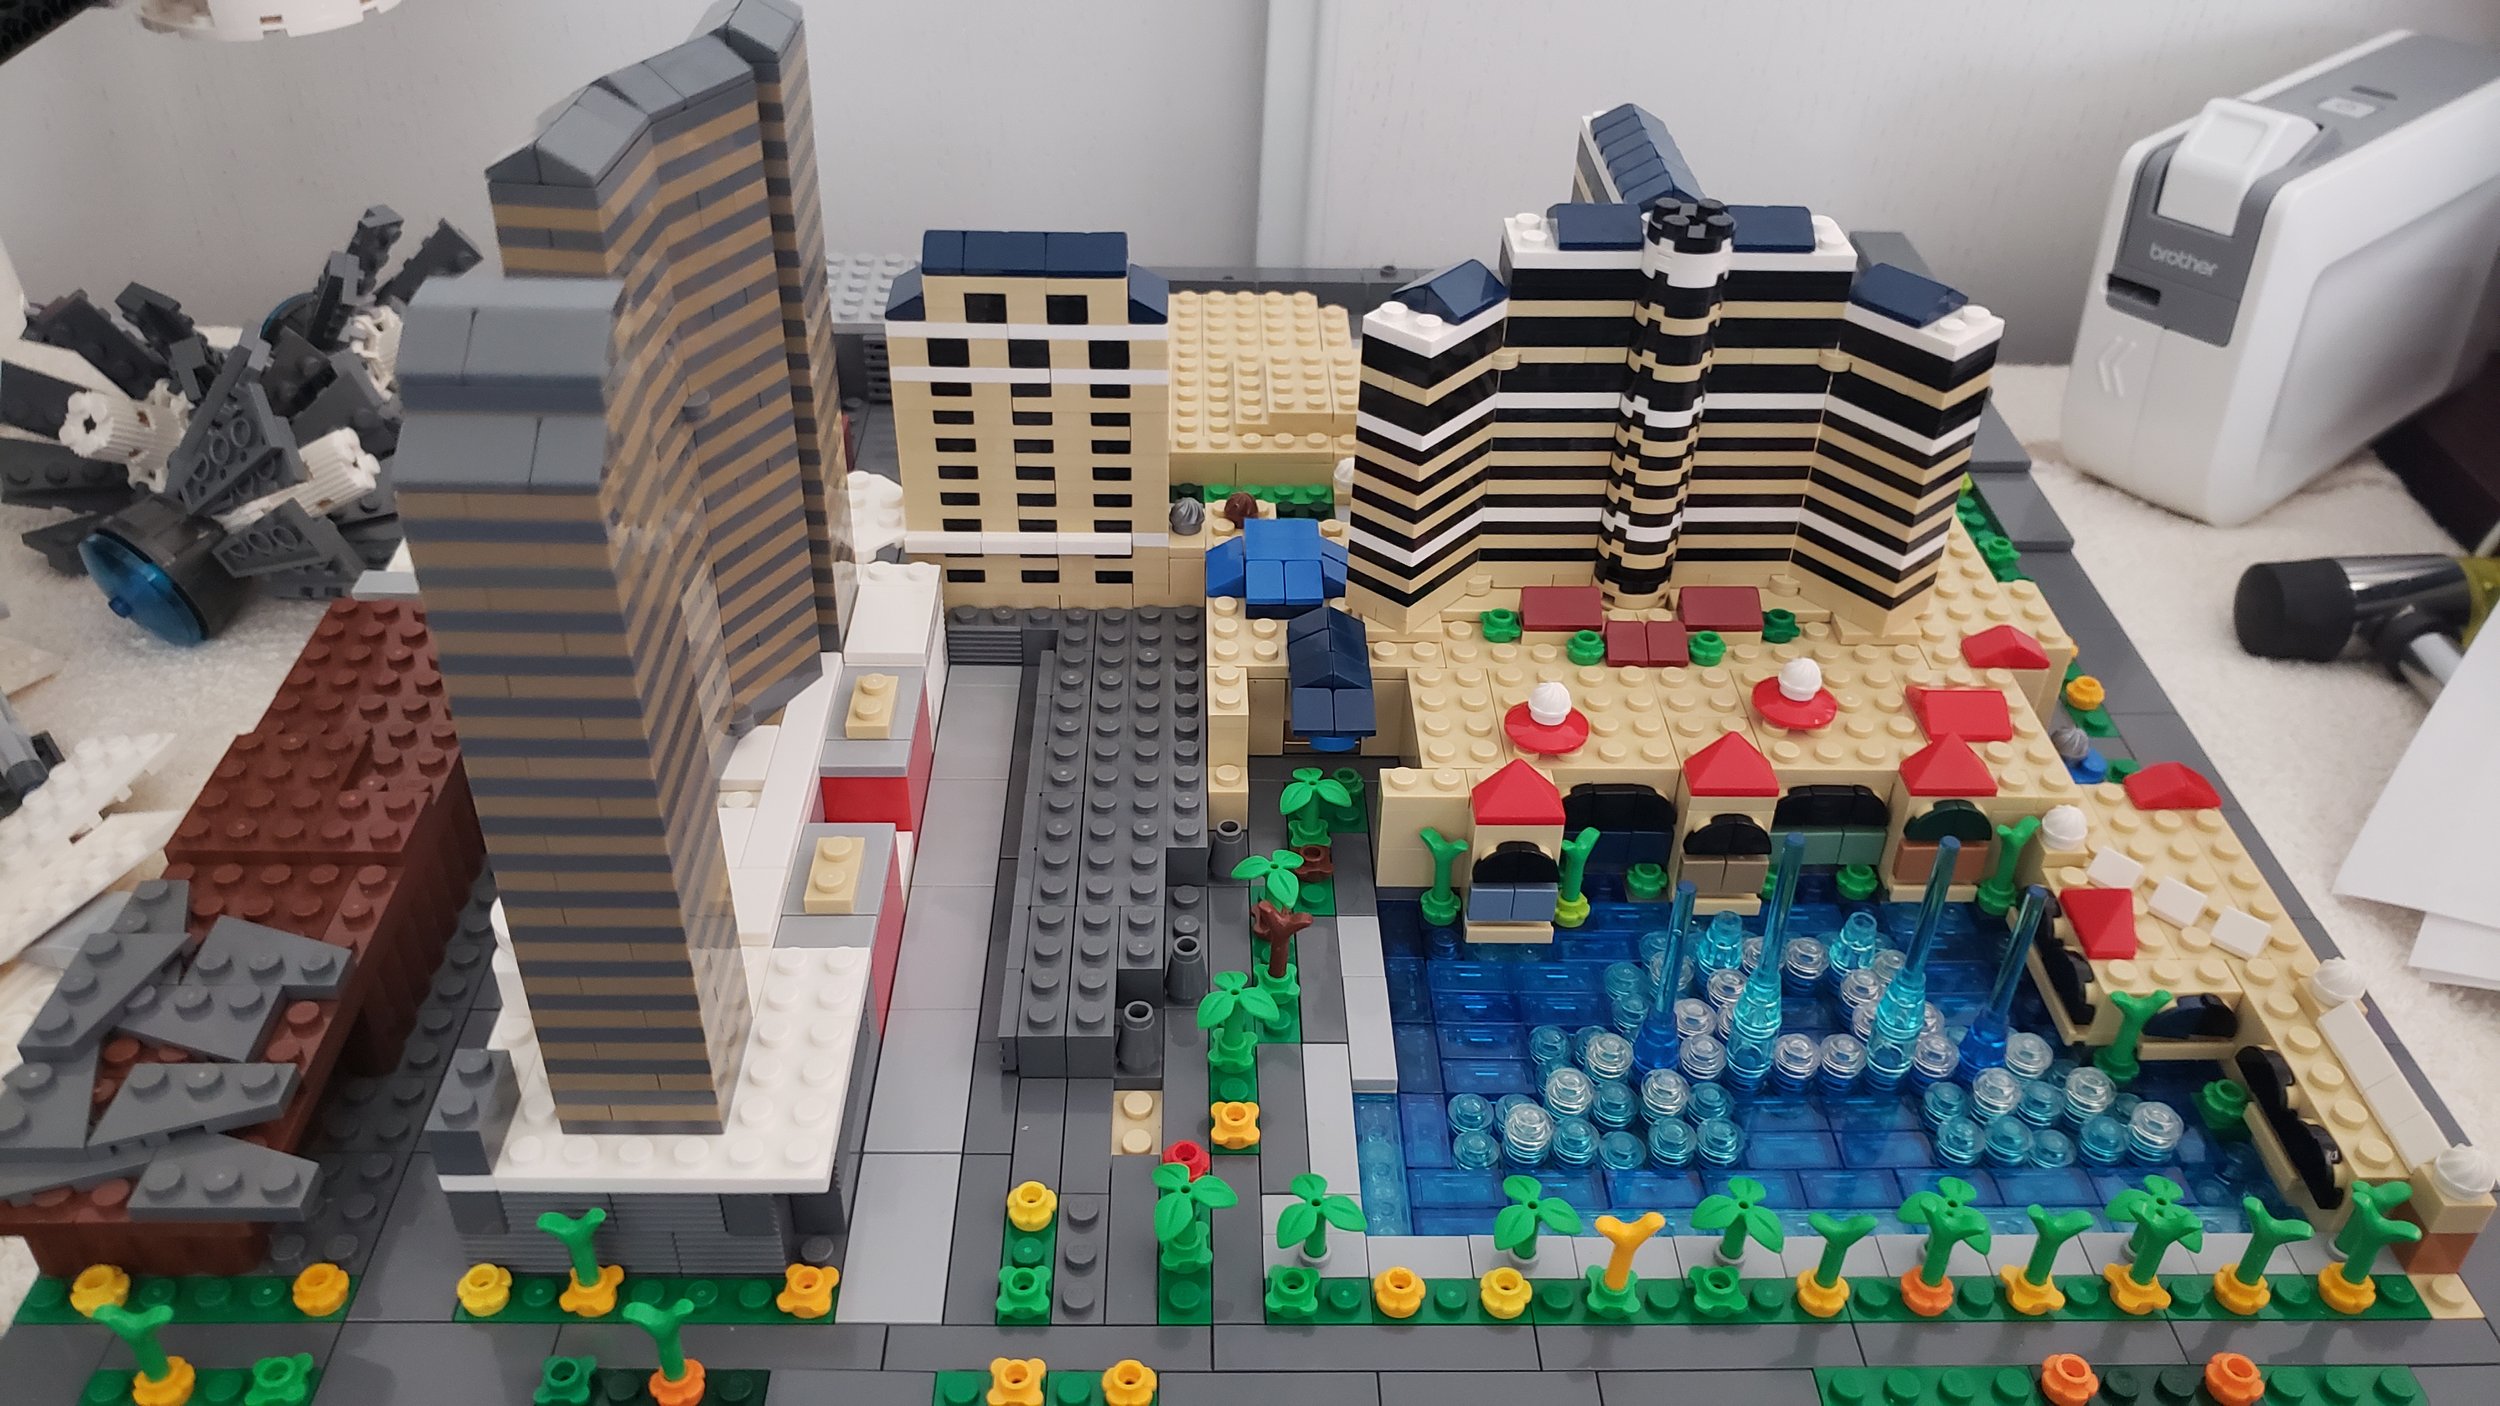 Micro LEGO Las Vegas on display this - Beyond the Brick